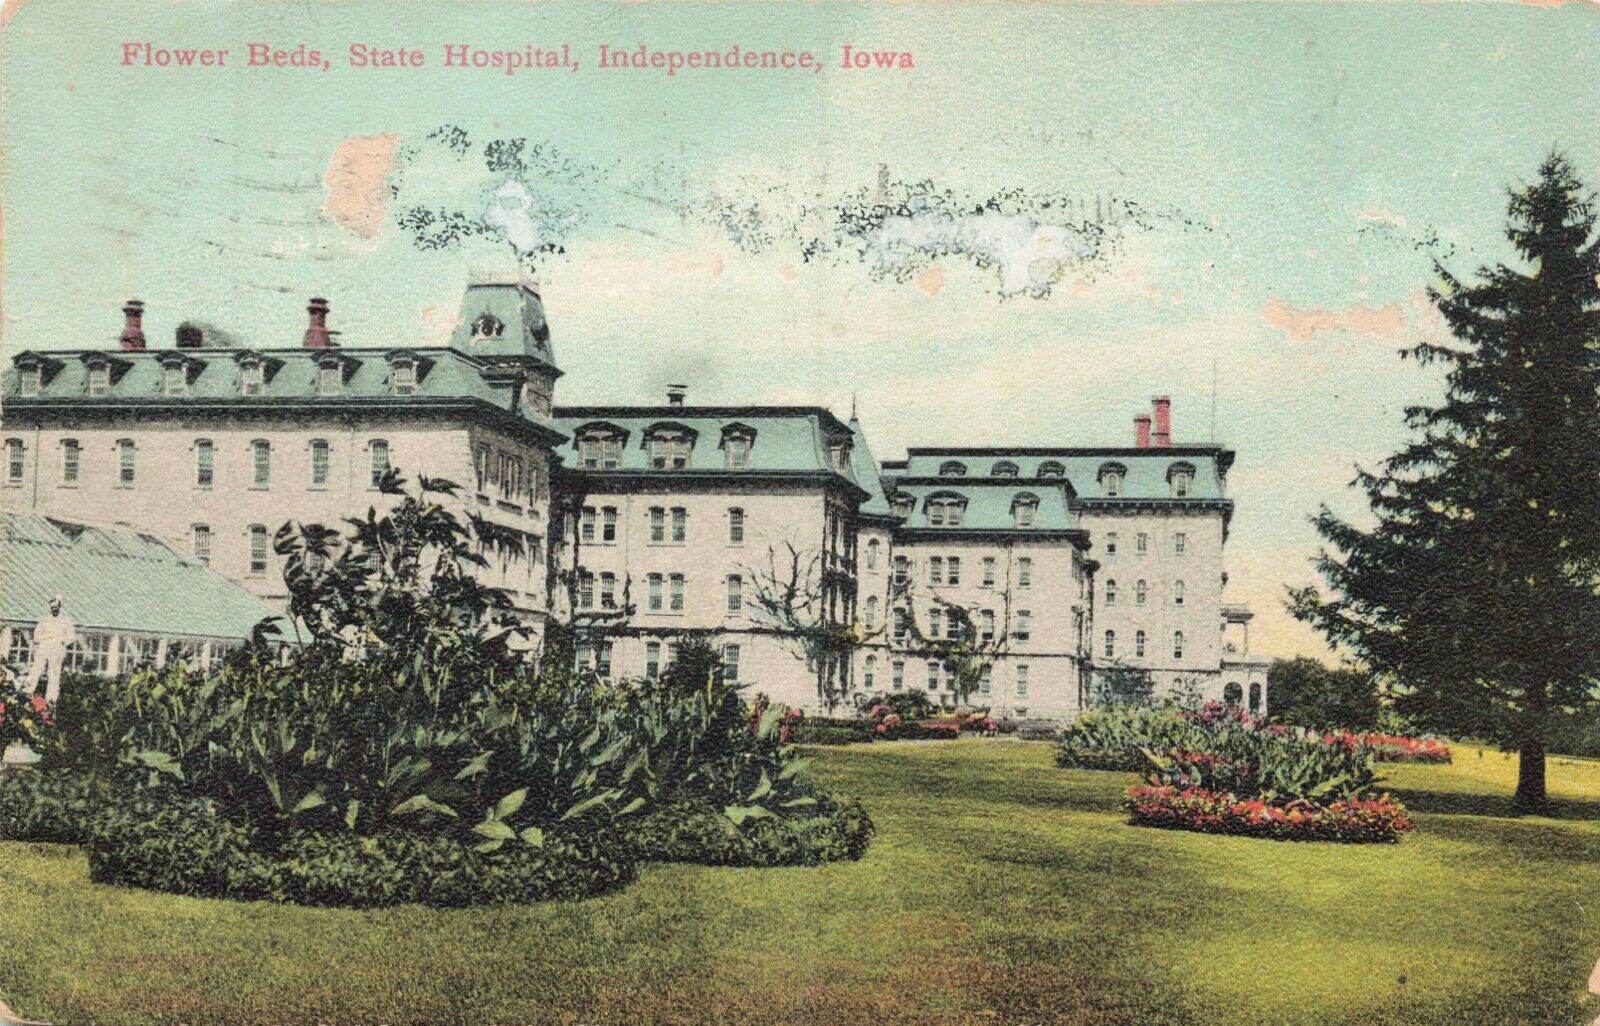 Independence Iowa State Hospital Insane Asylum 1909 pm Postcard vintage US IA